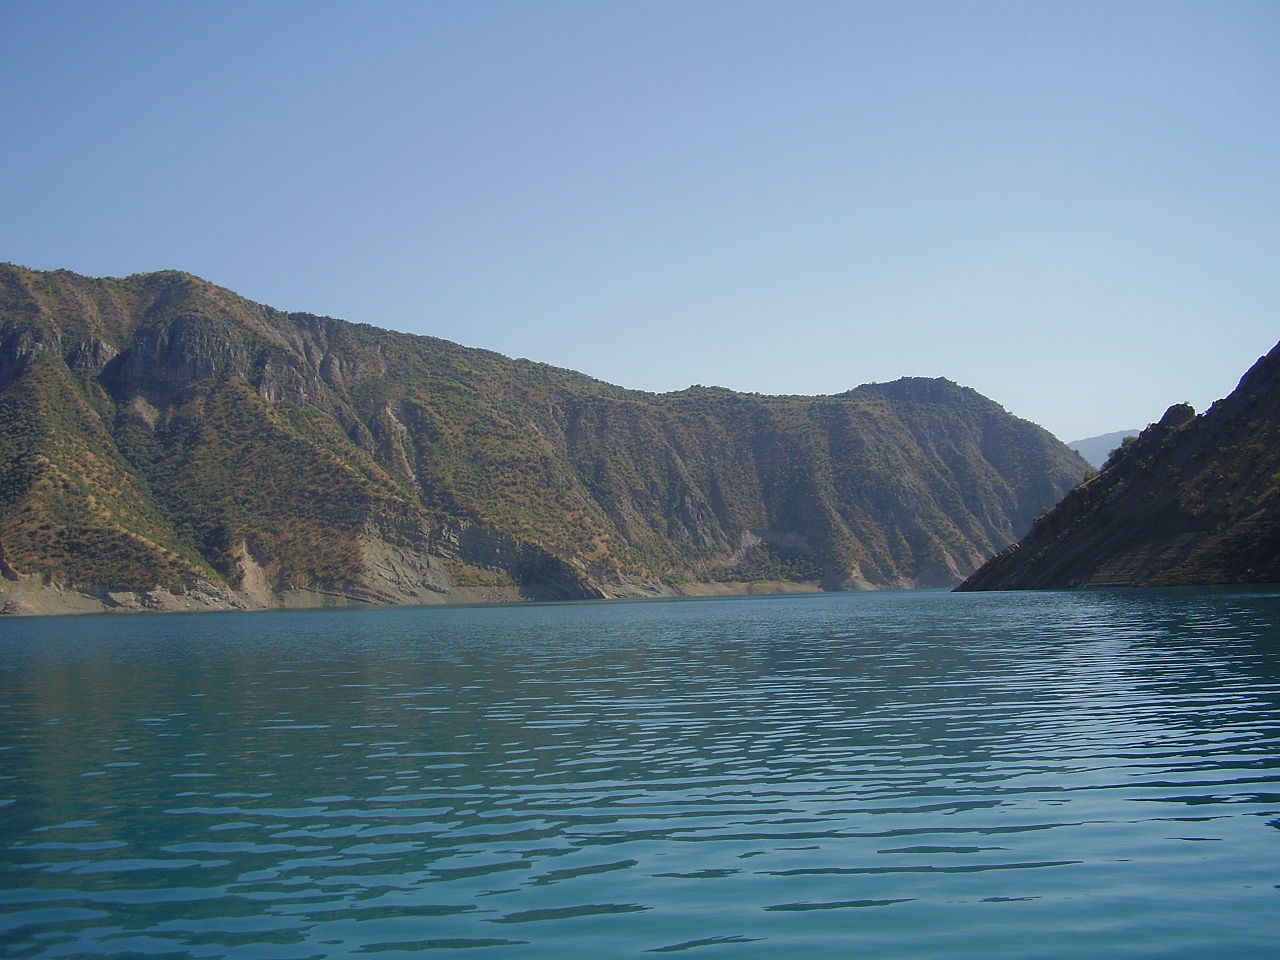 Tadzjikistan bouwt hoogste stuwdam ter wereld